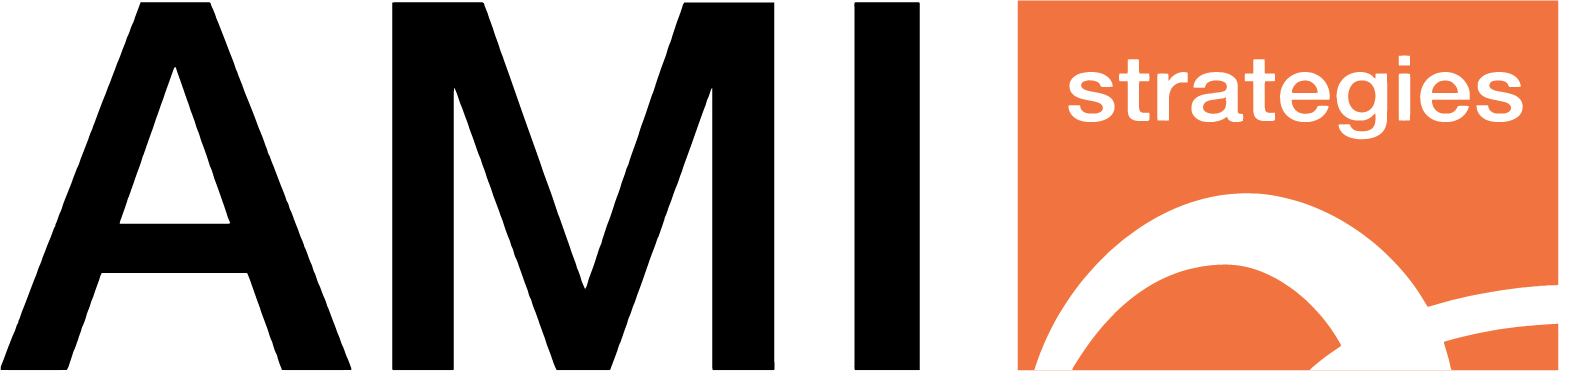 A black and orange logo for ami strategies